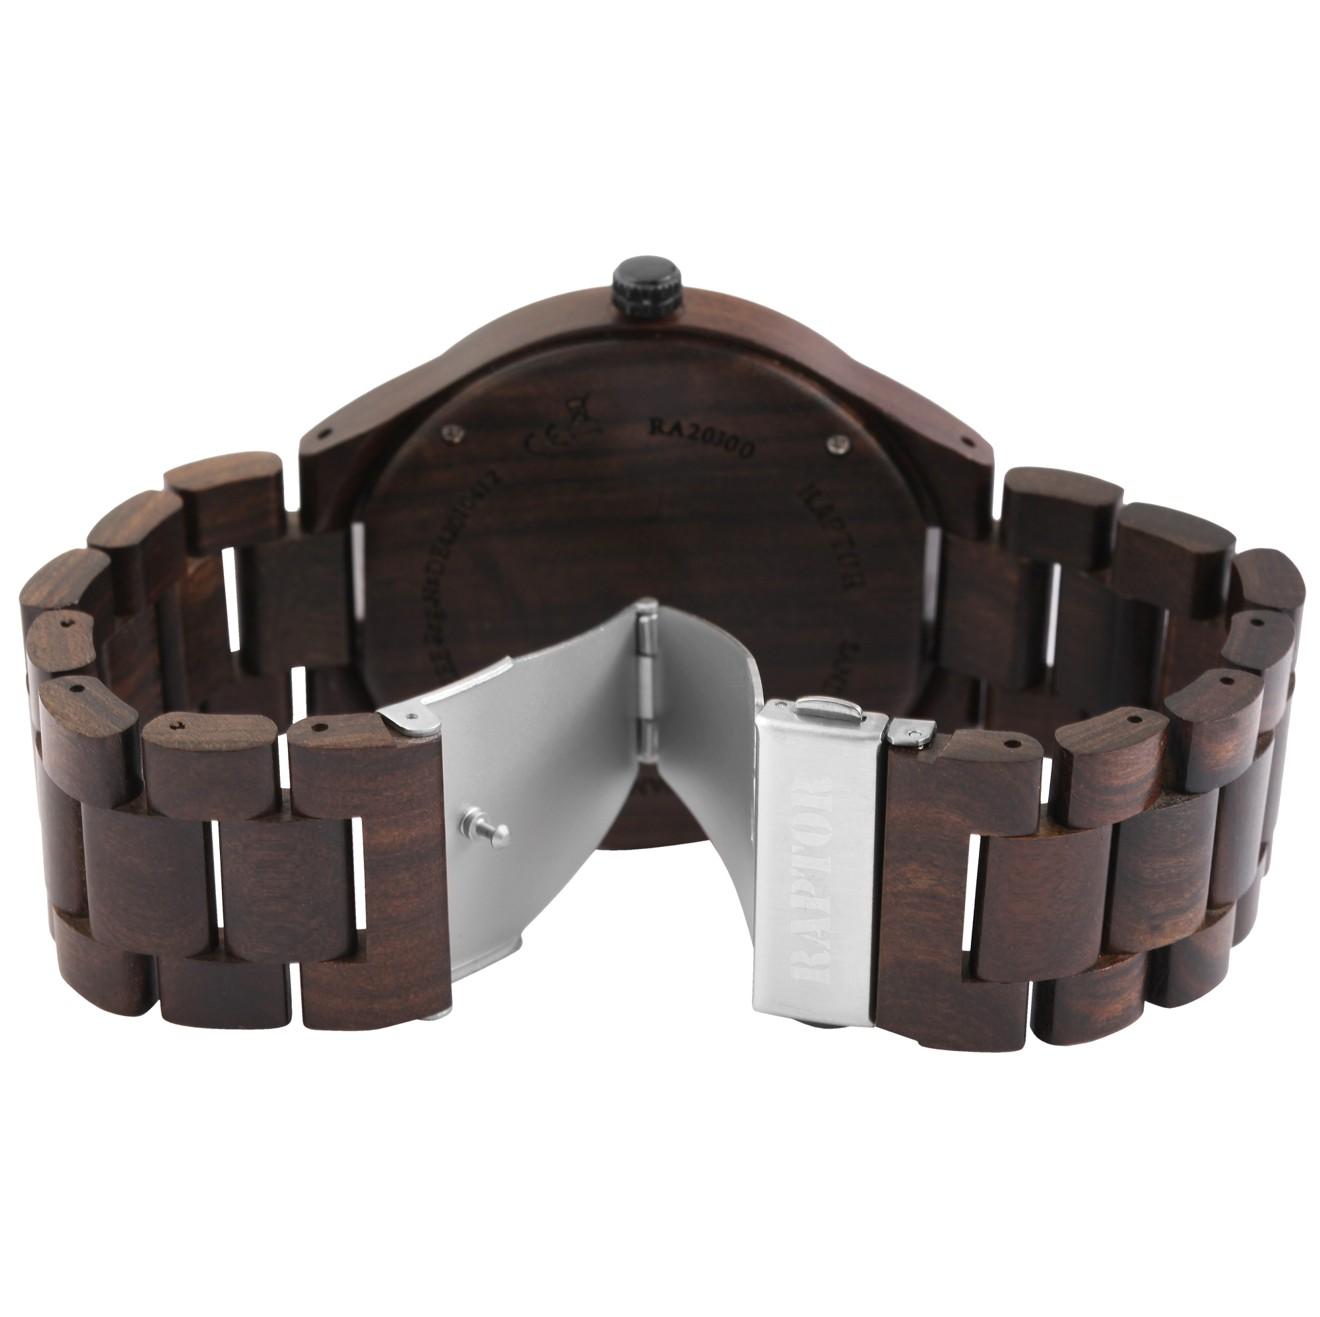 RA20300 Panske hodinky Raptor zo santaloveho dreva s lebkou na ciferniku multibella